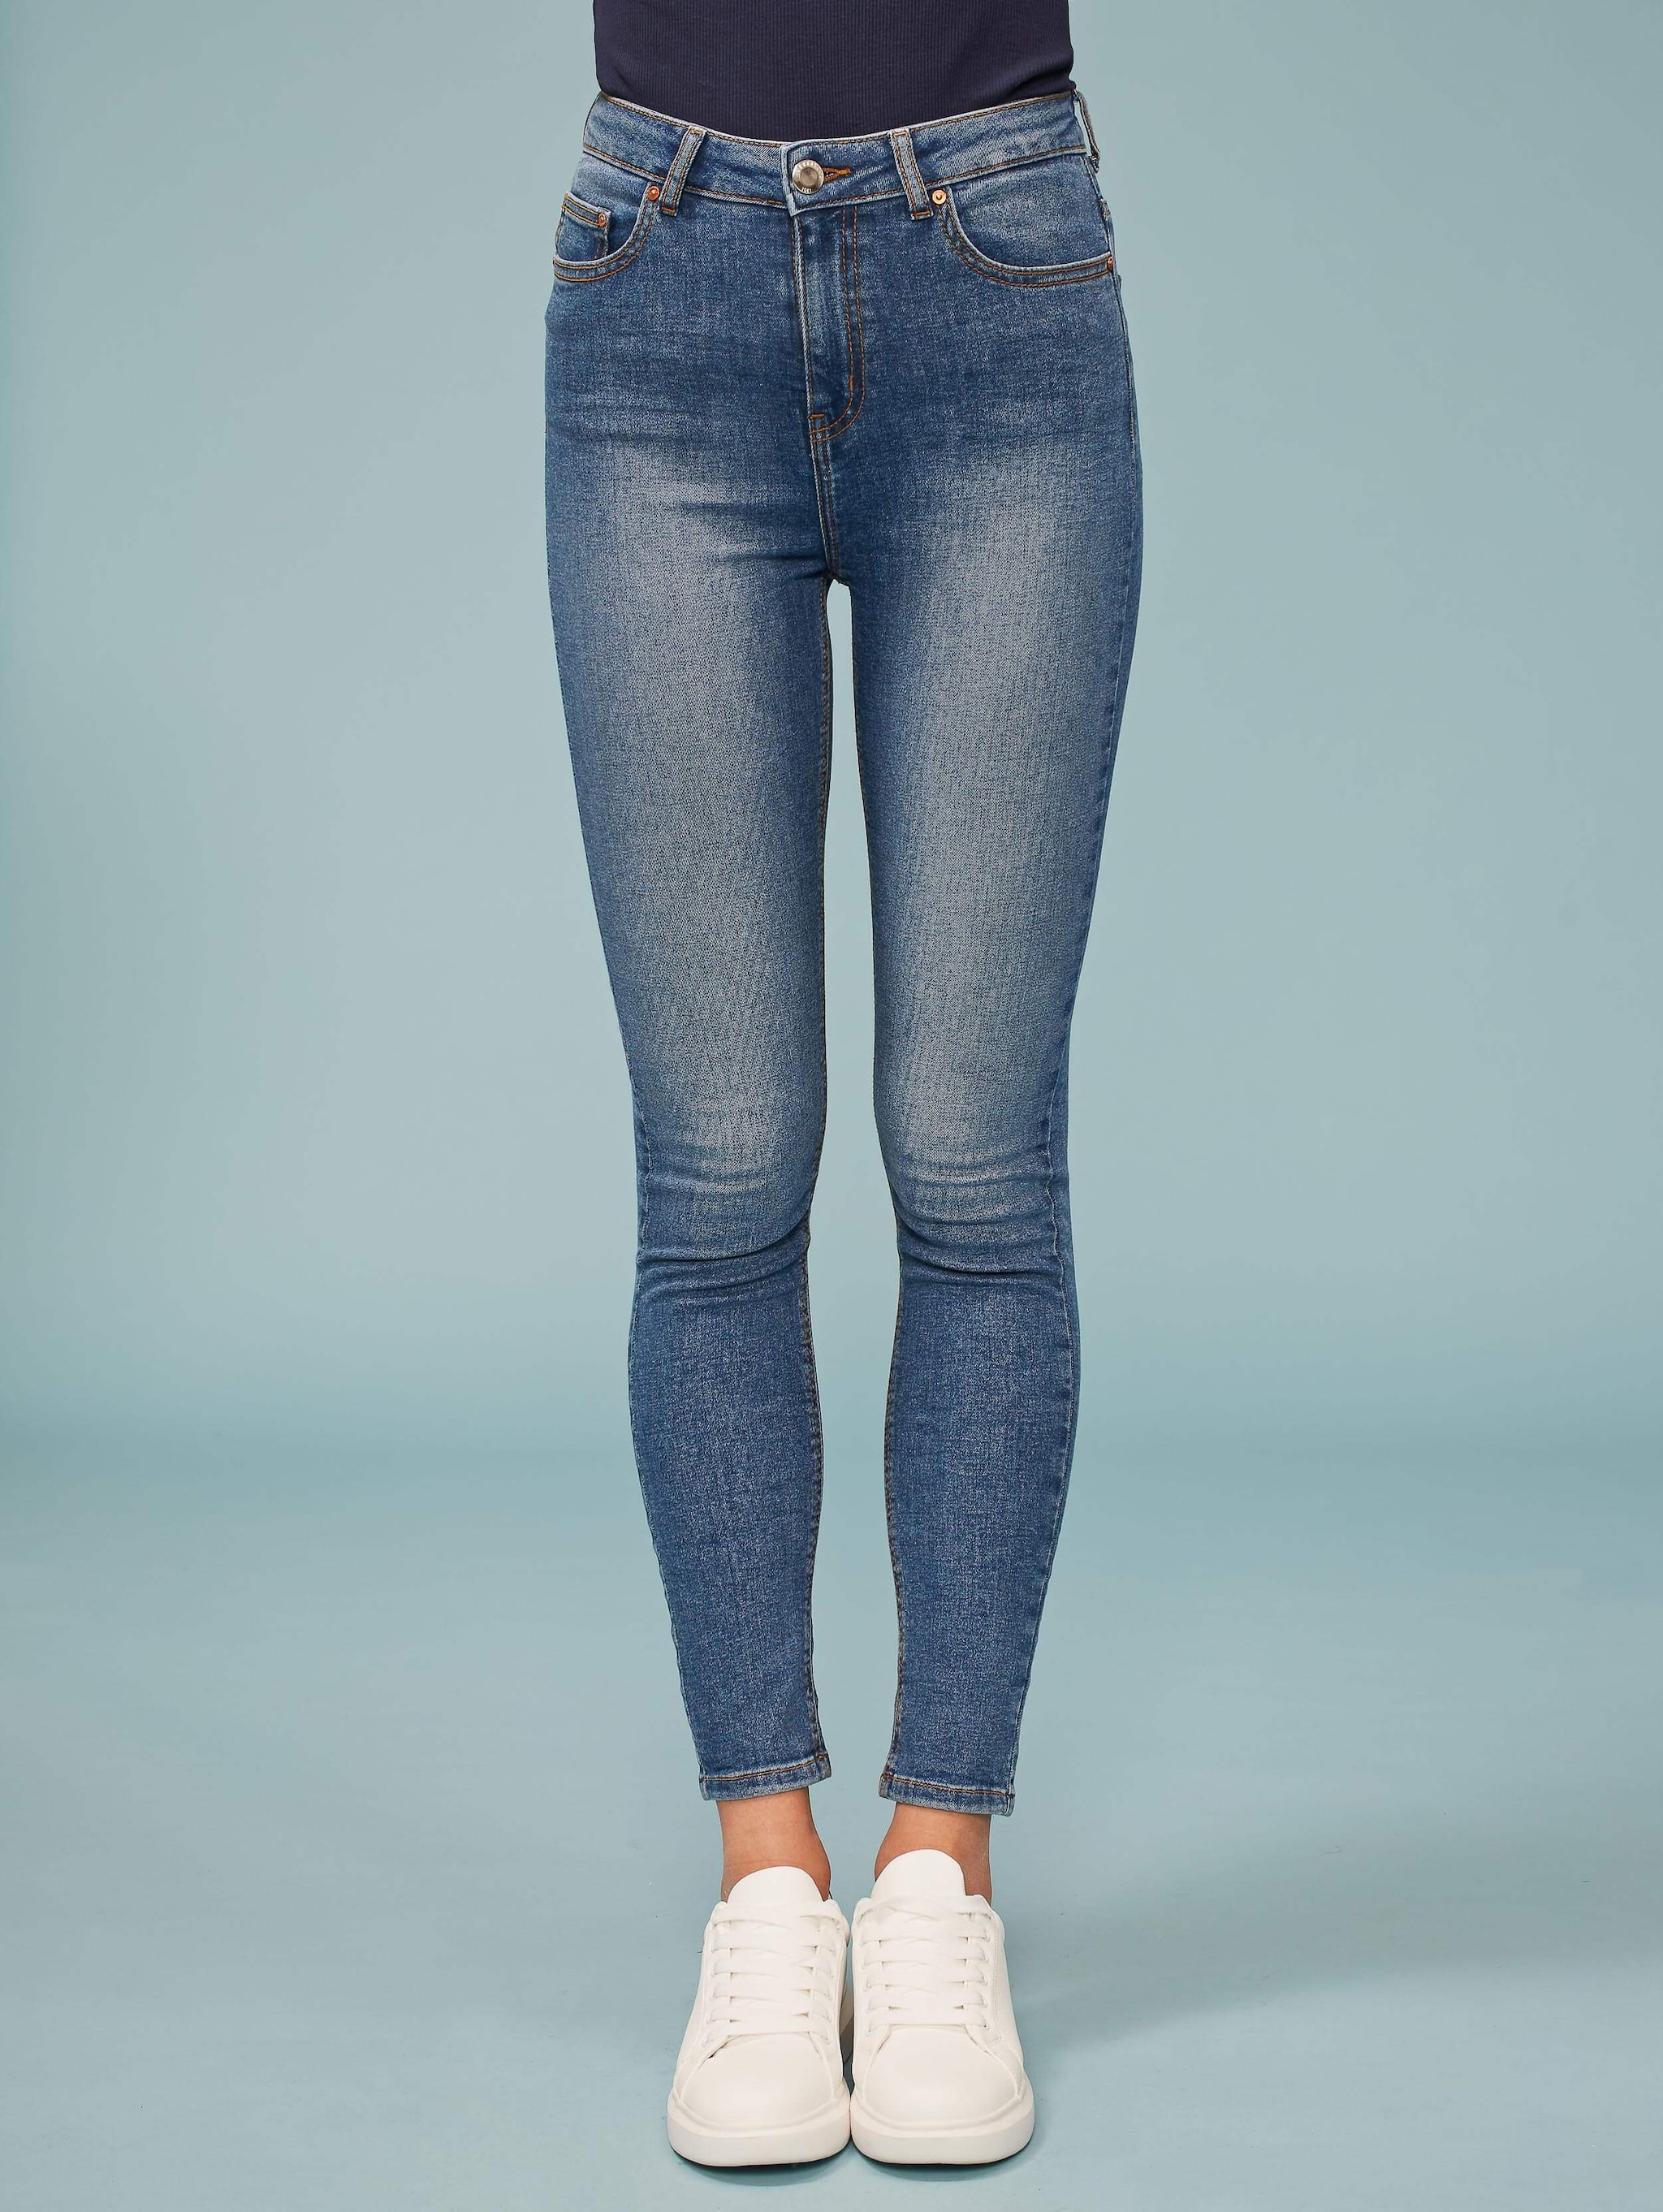 high waisted skinny jeans long leg